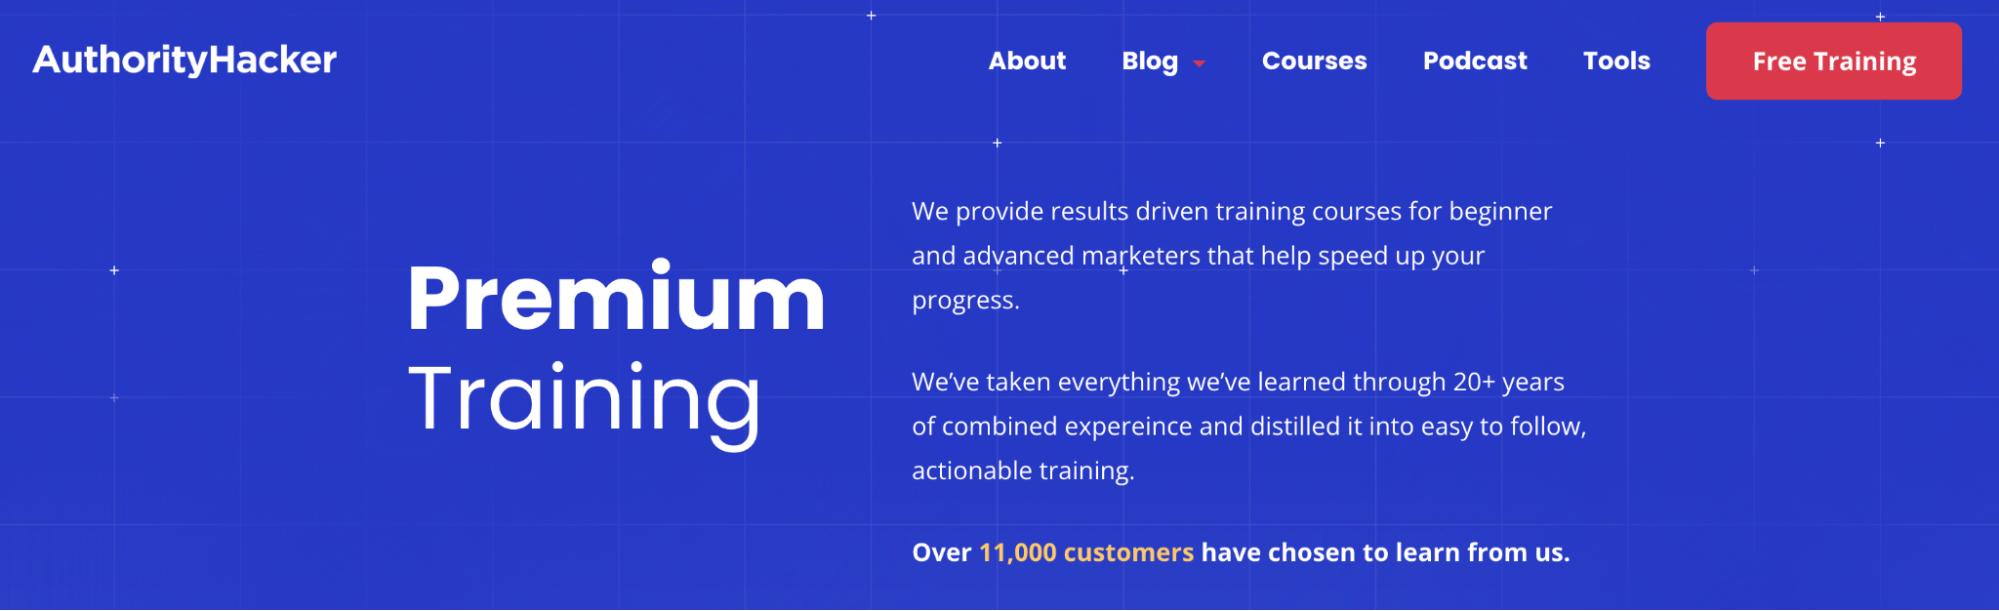 Premium SEO training landing page, via Authority Hacker  